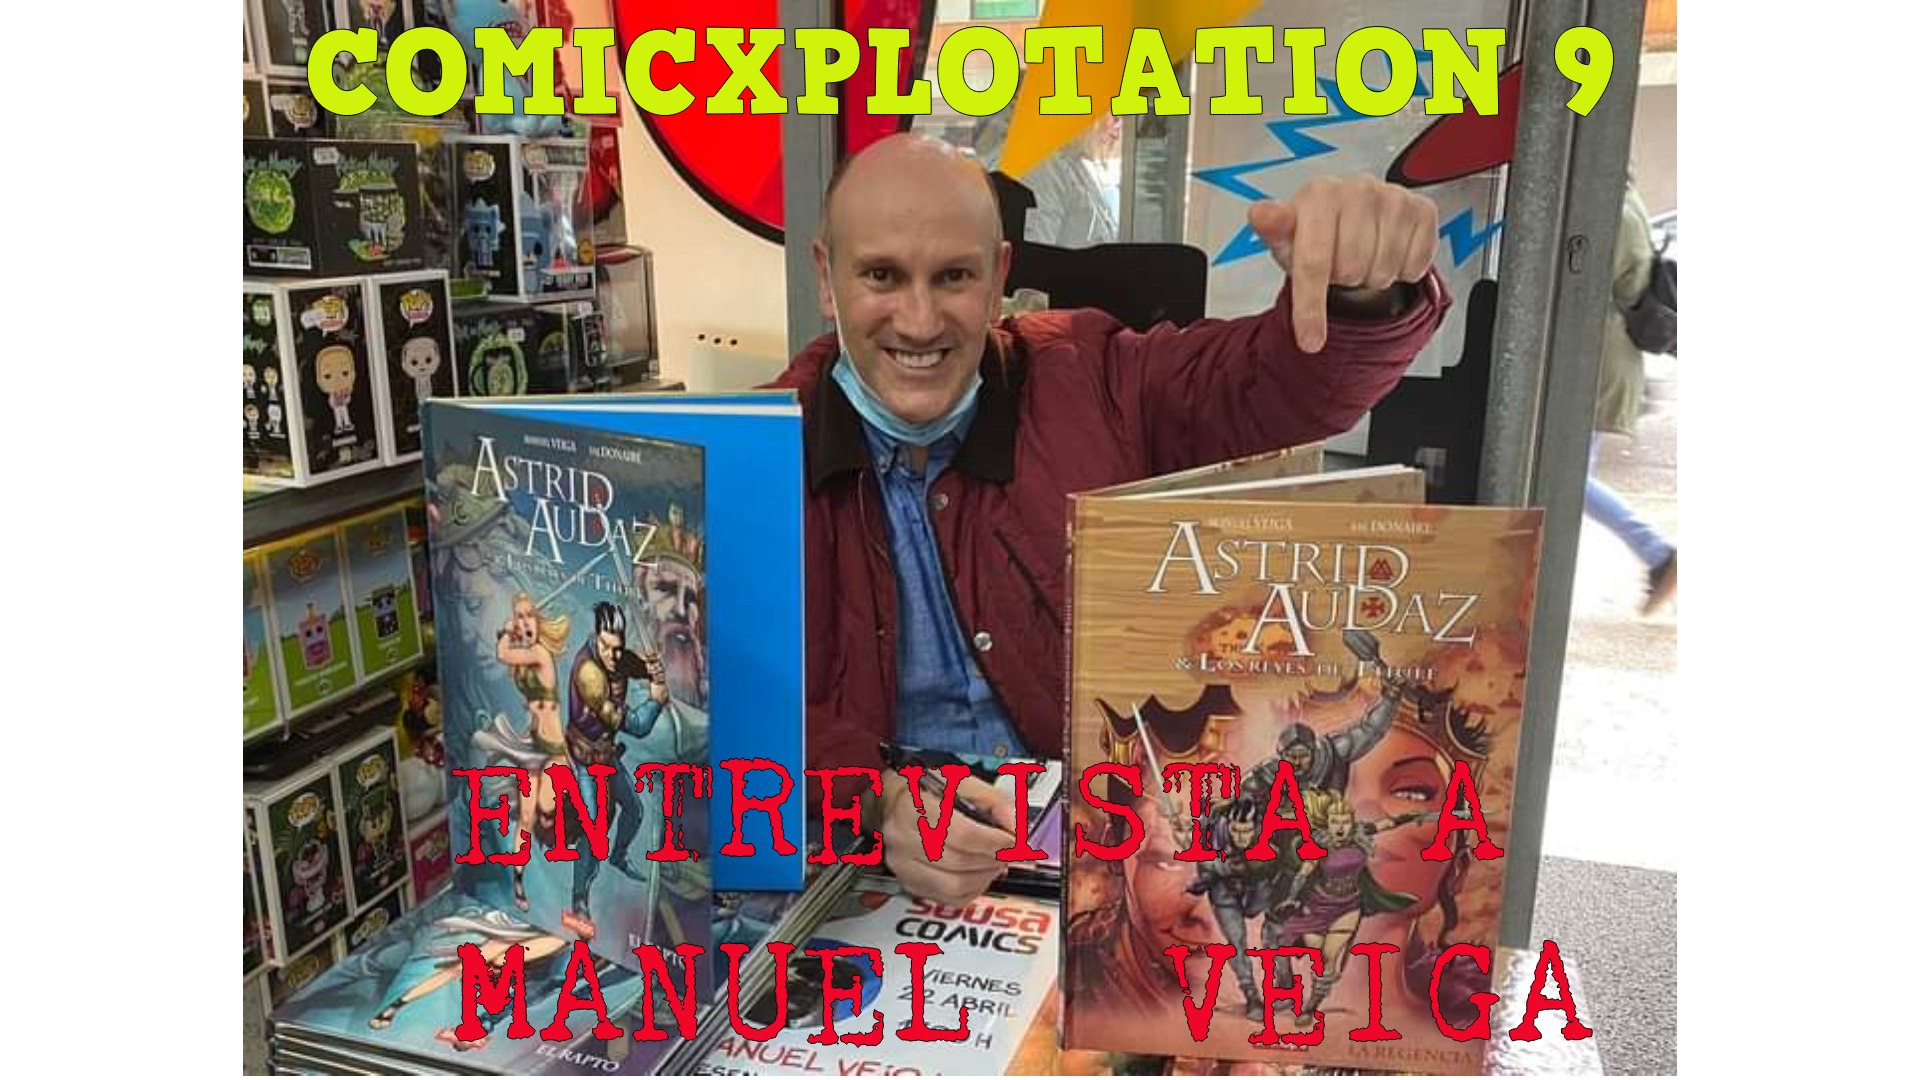 Comicxplotation 9 entrevista a Manuel Veiga